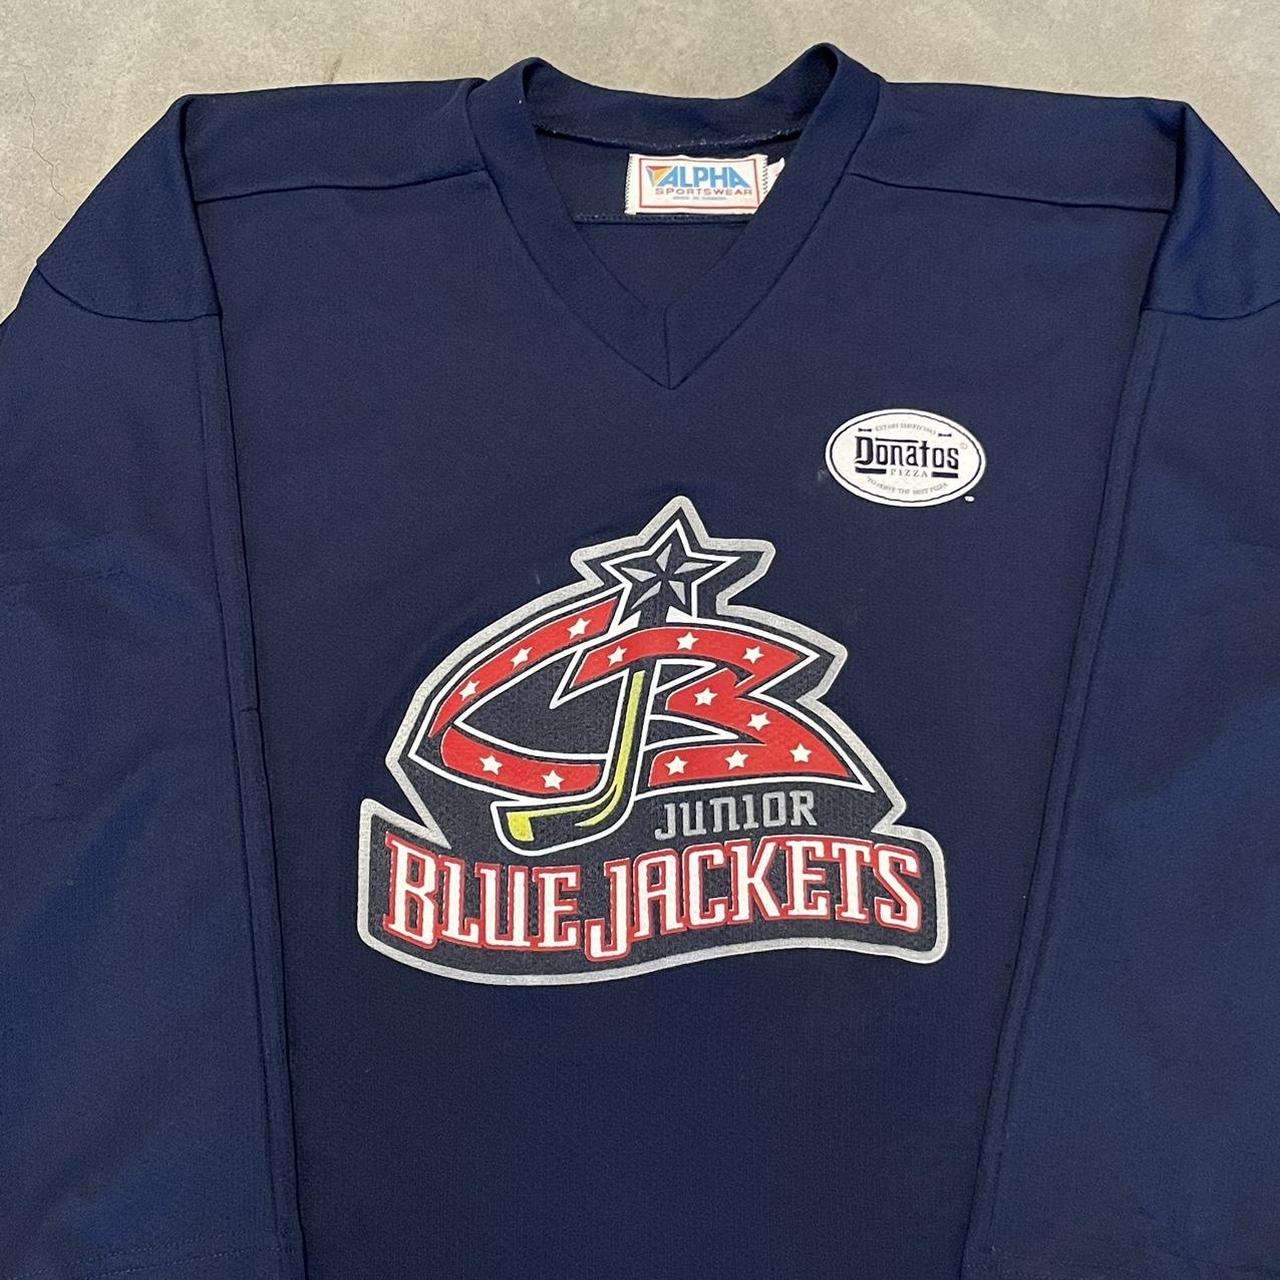 Columbus Blue Jackets NHL jersey - Depop